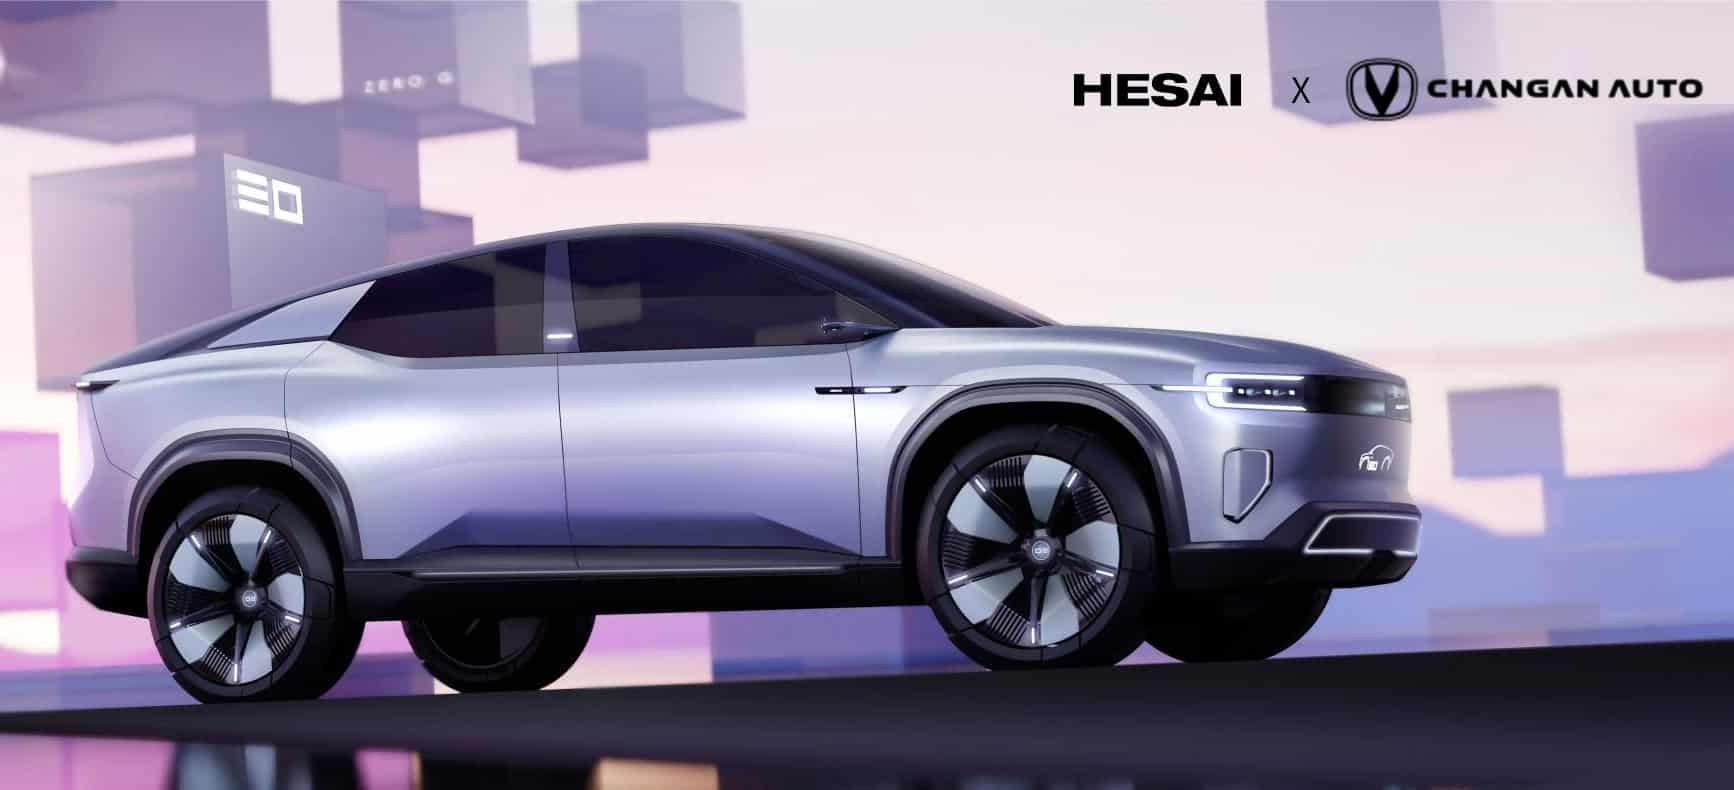 Hesai Lidar Announces ADAS Design Win for Changan's New Series Production Vehicles